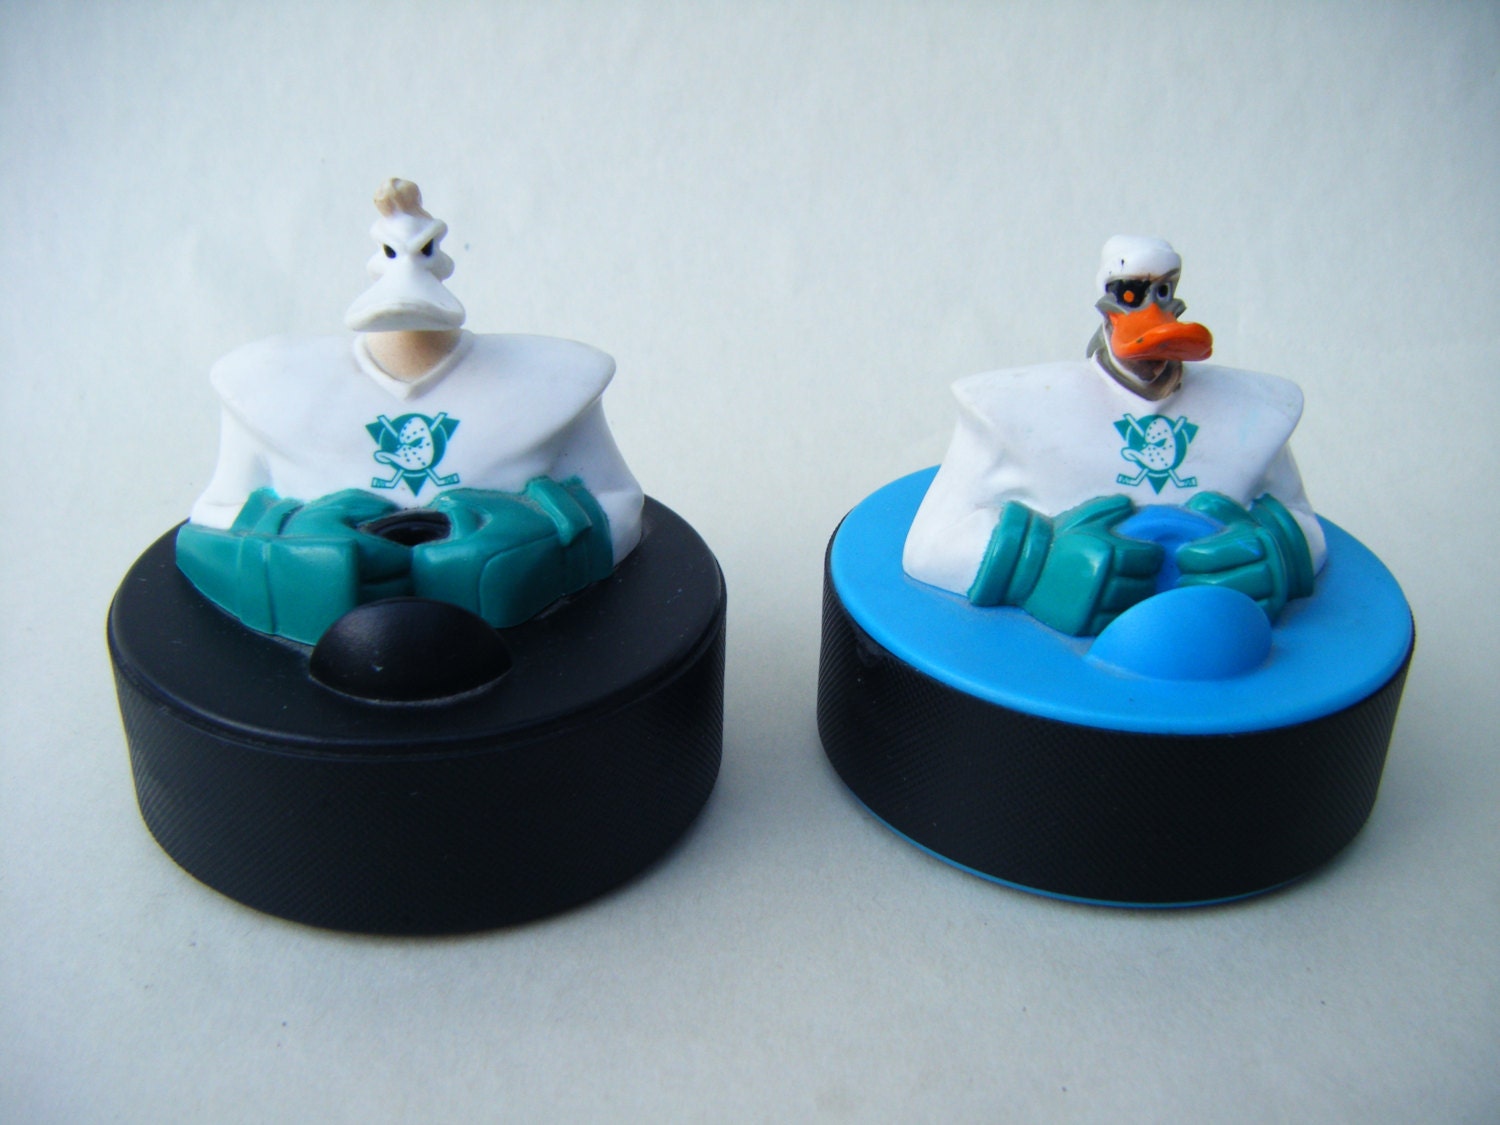 The mighty ducks animated series figures : r/nostalgia